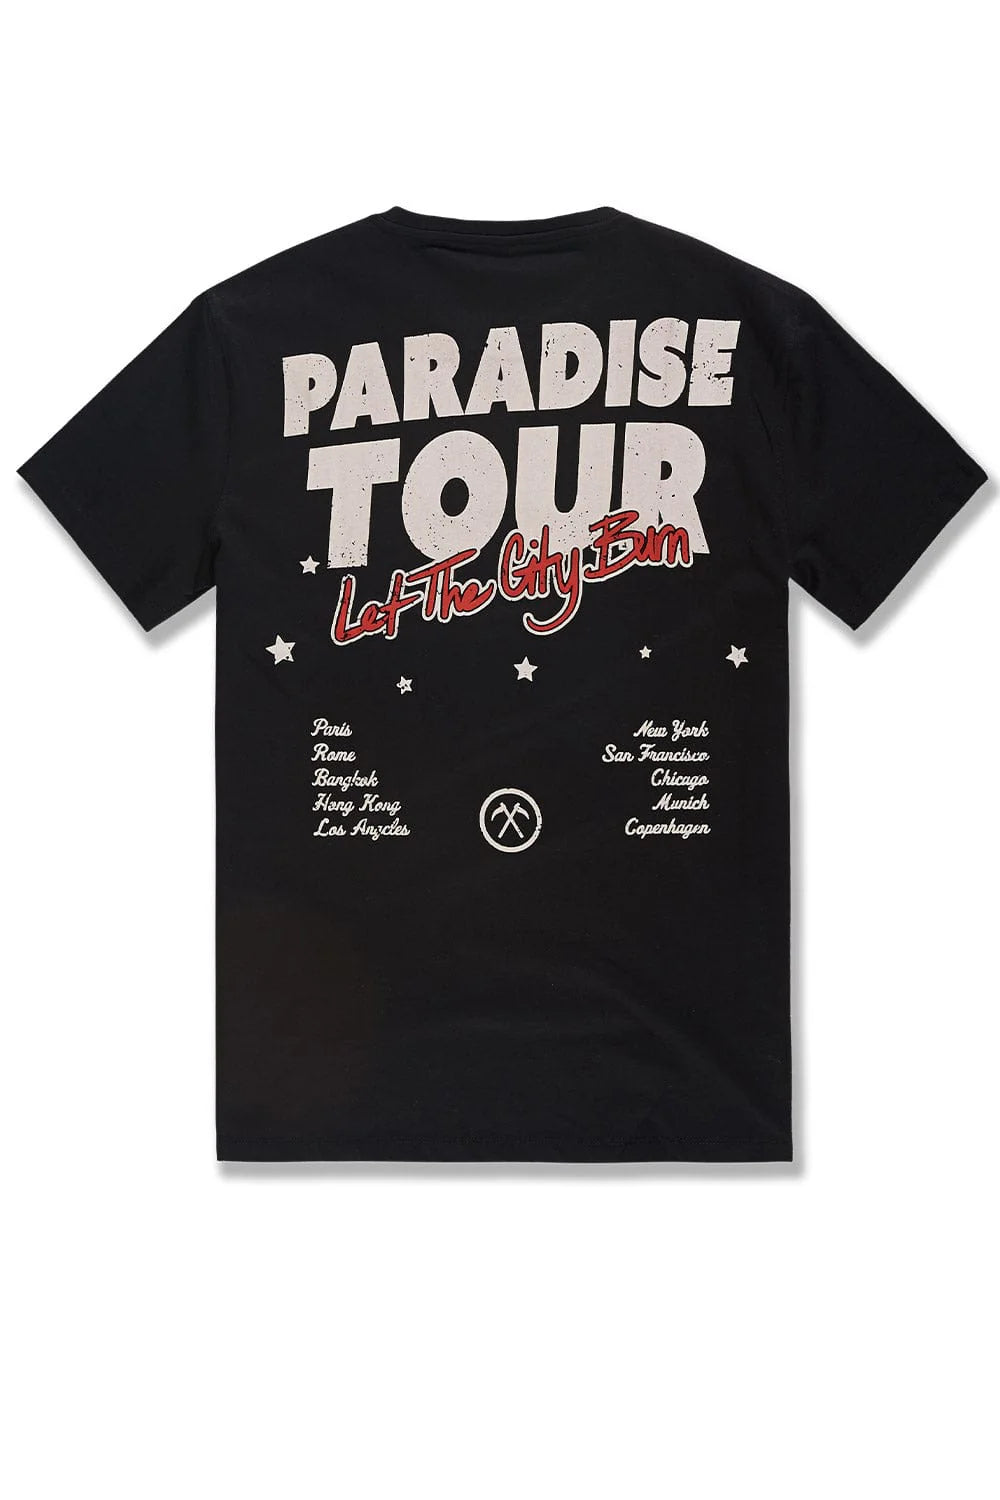 Jordan Craig -Paradise Tour T-Shirt -Black